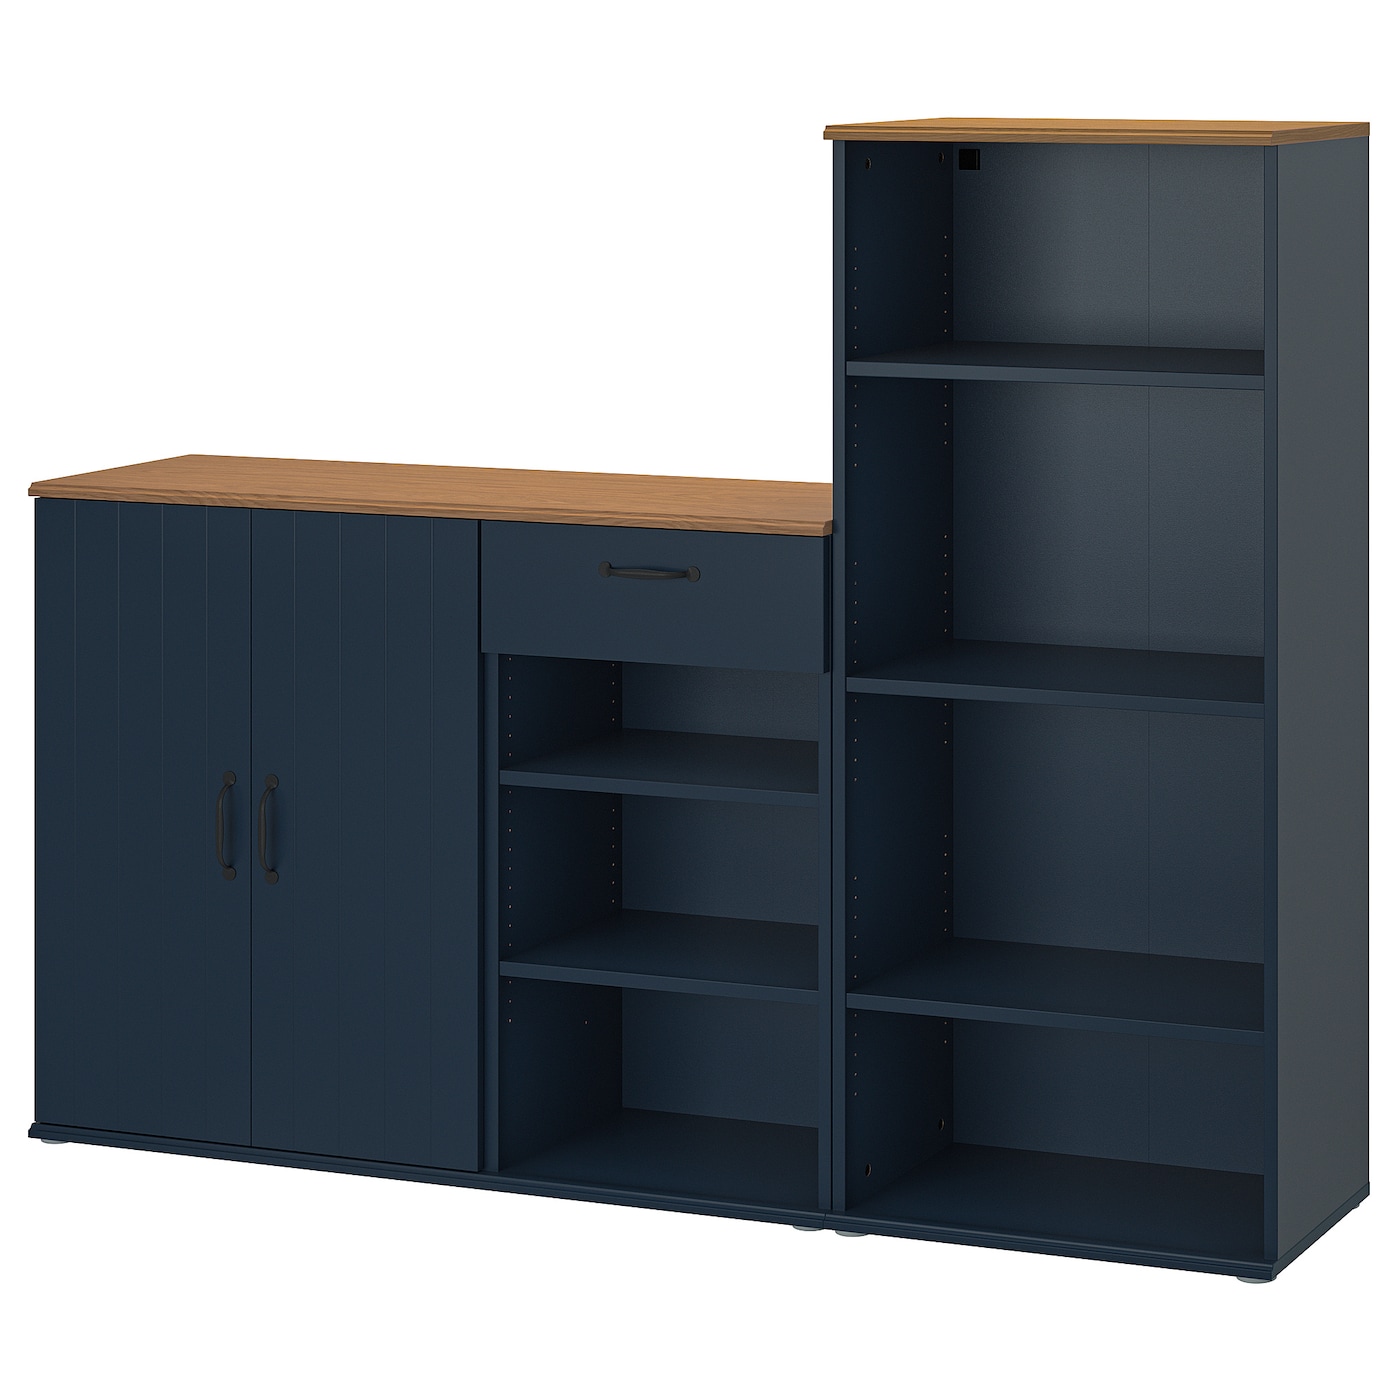 Шкаф - SKRUVBY  IKEA/ СКРУВБИ ИКЕА, 180х140  см, синий/под беленый дуб